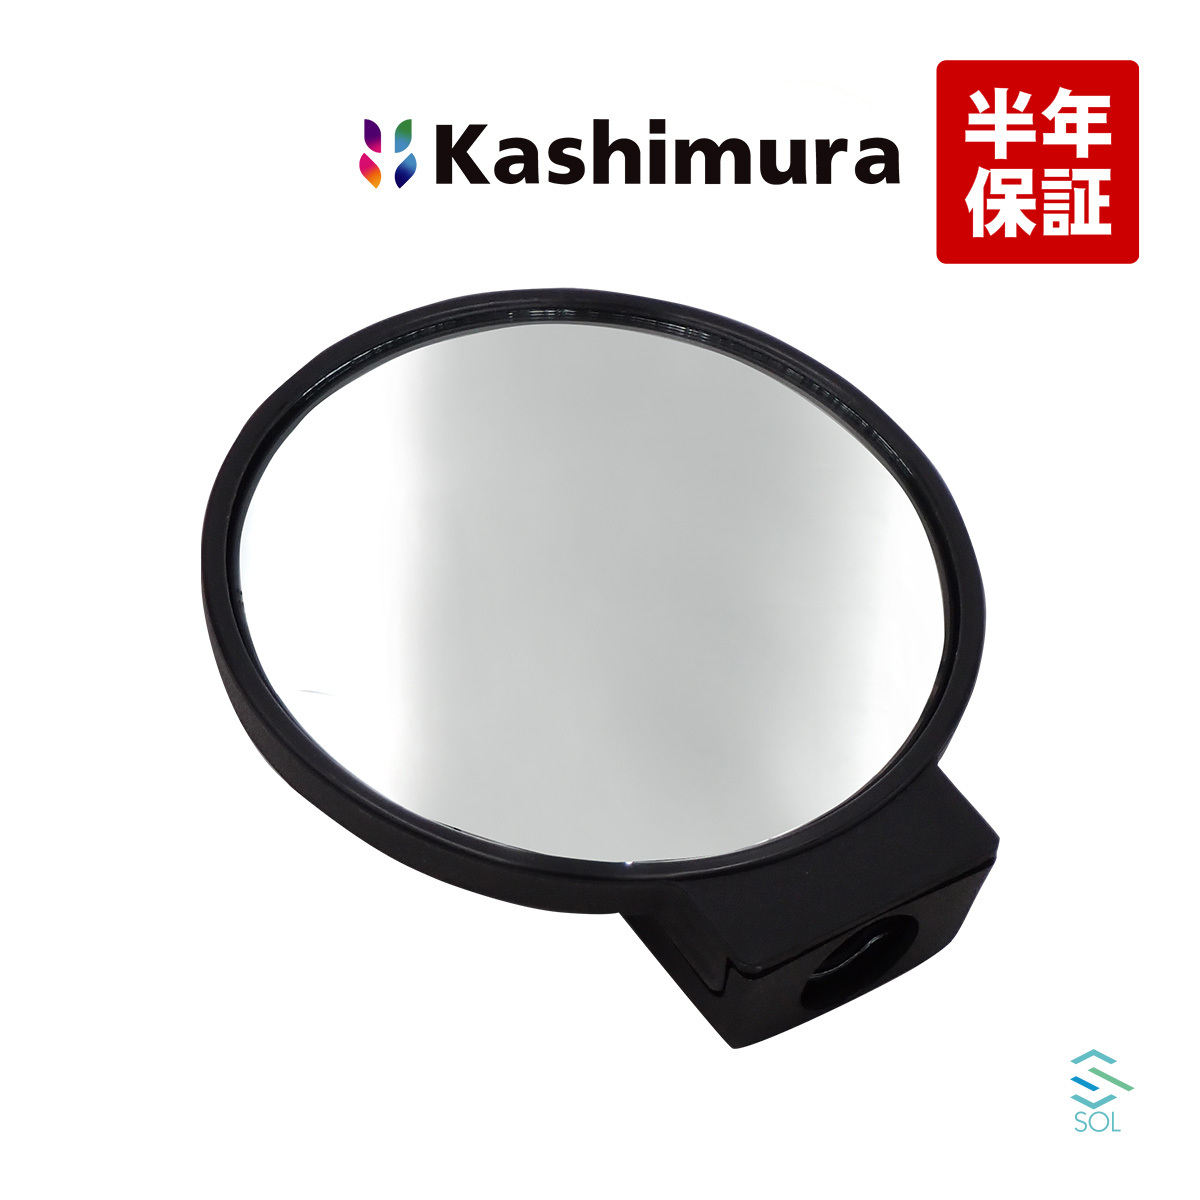  Kashimura genuine products Kashimura KU10752 under mirror Elf exhaust .b hybrid L freon g Elf wide NHR NHS NKS NKR NPR